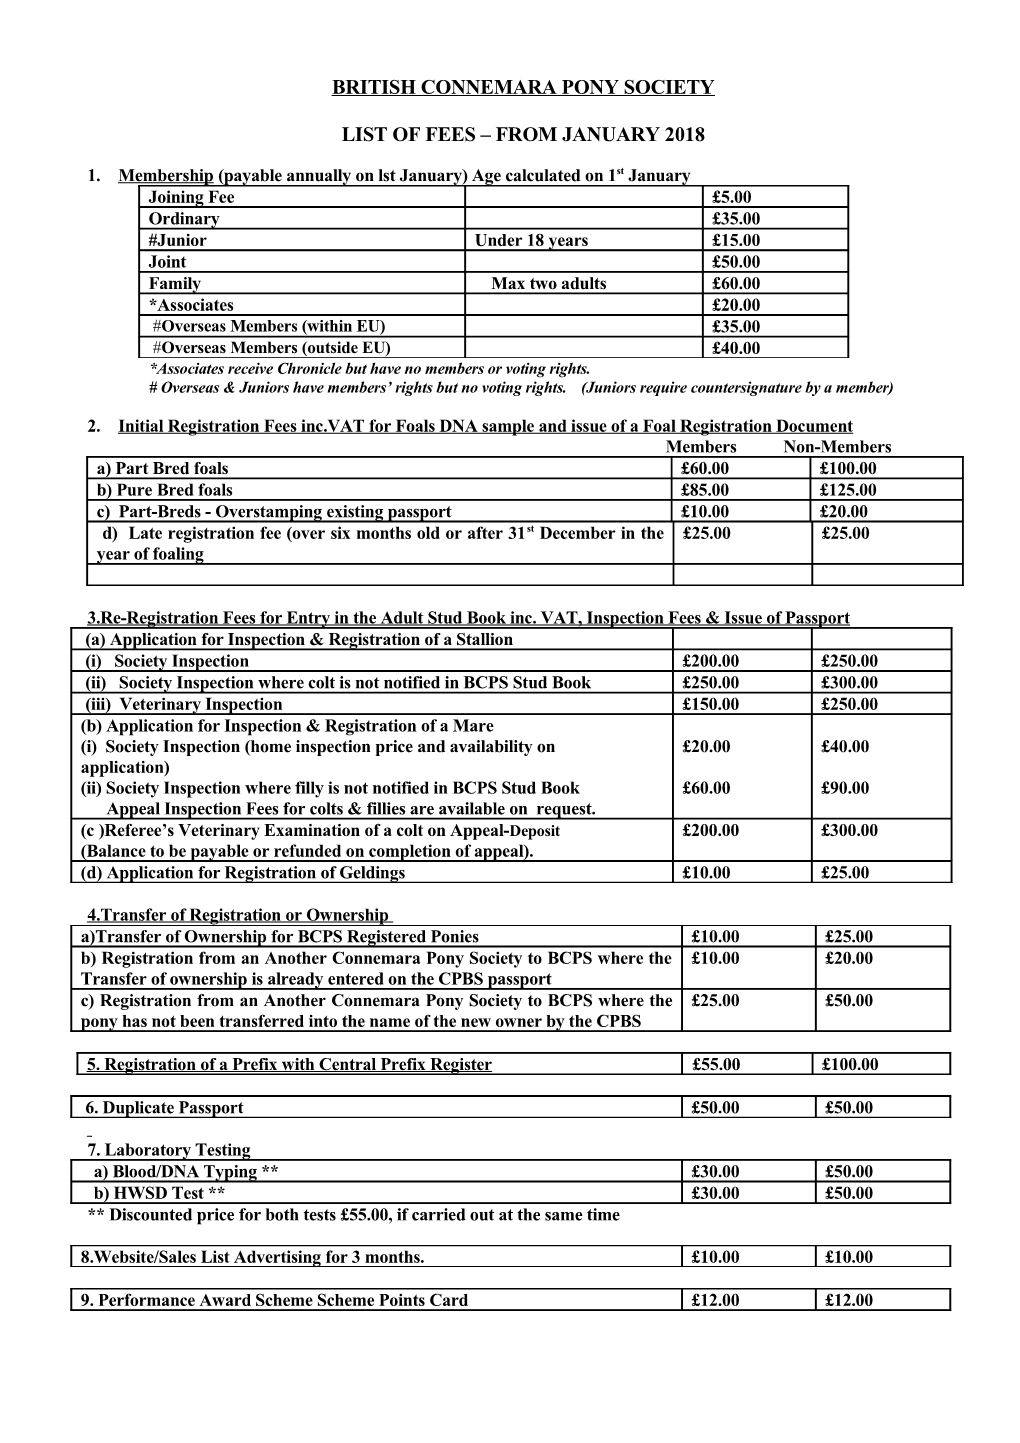 List of Fees